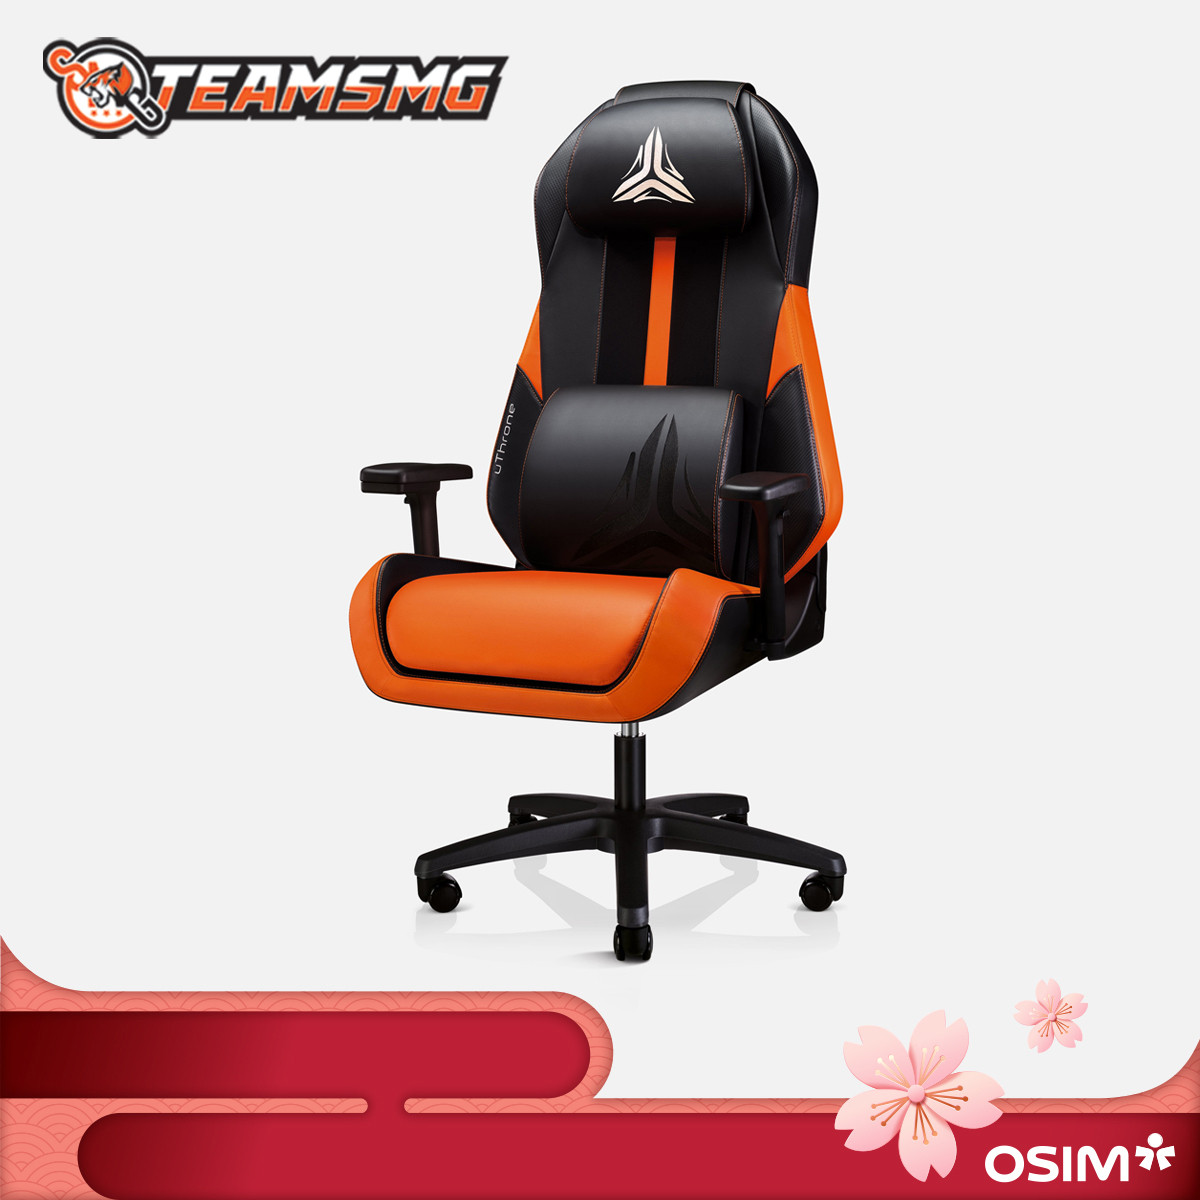  PREDATOR  Gaming  Chair  x OSIM  Pre order OSIM  Singapore